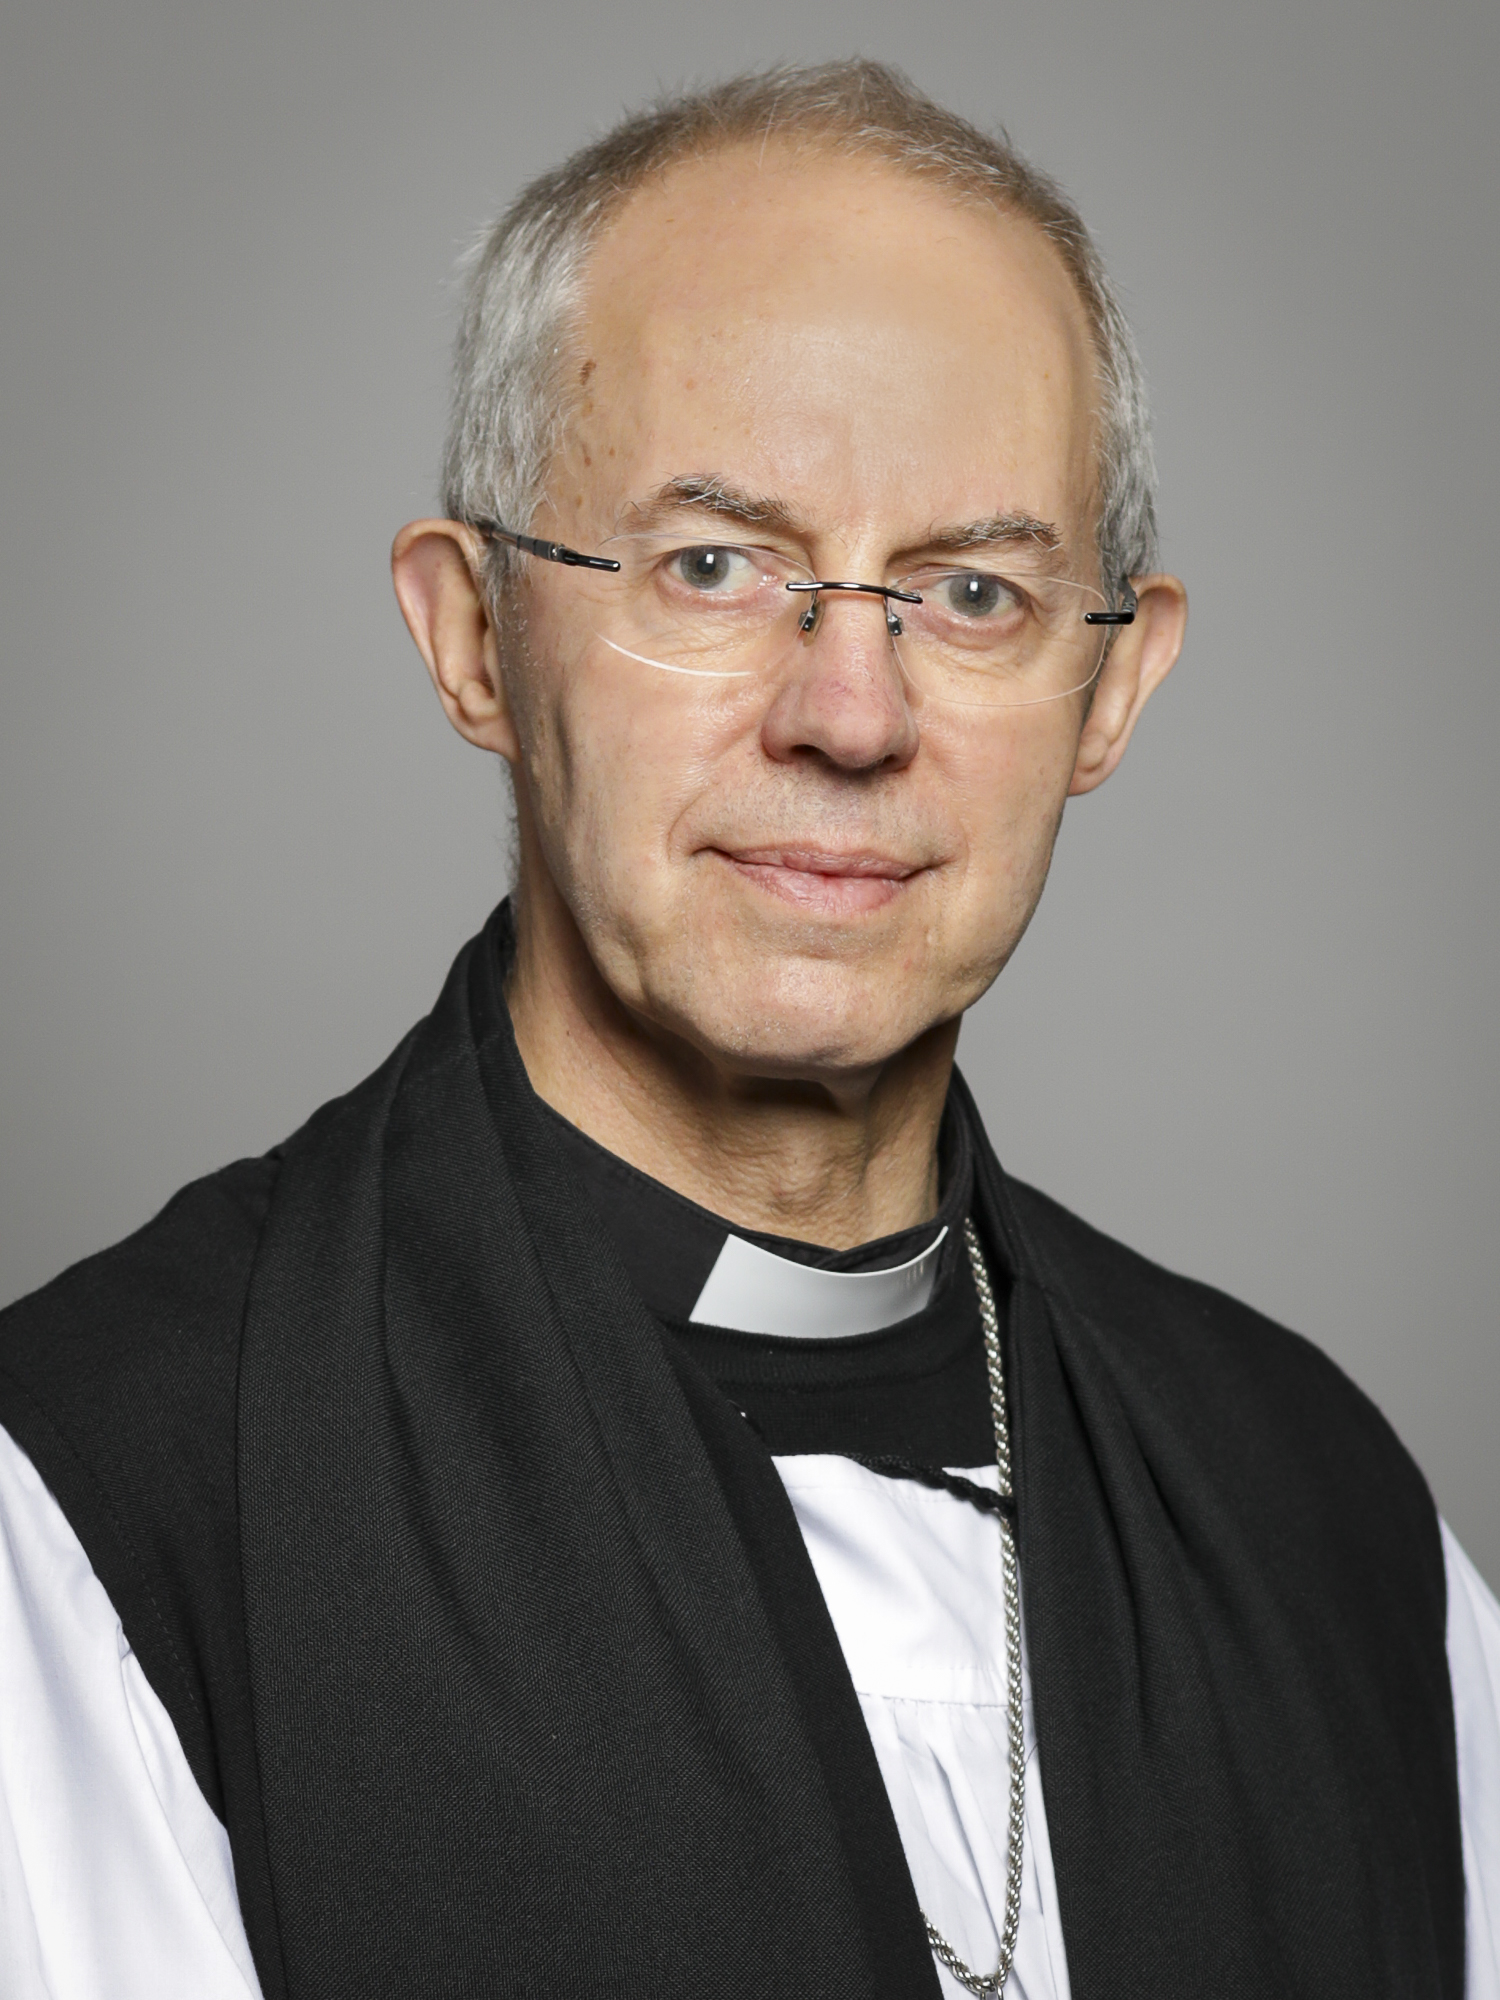 Archbishop of Canterbury - Wikipedia